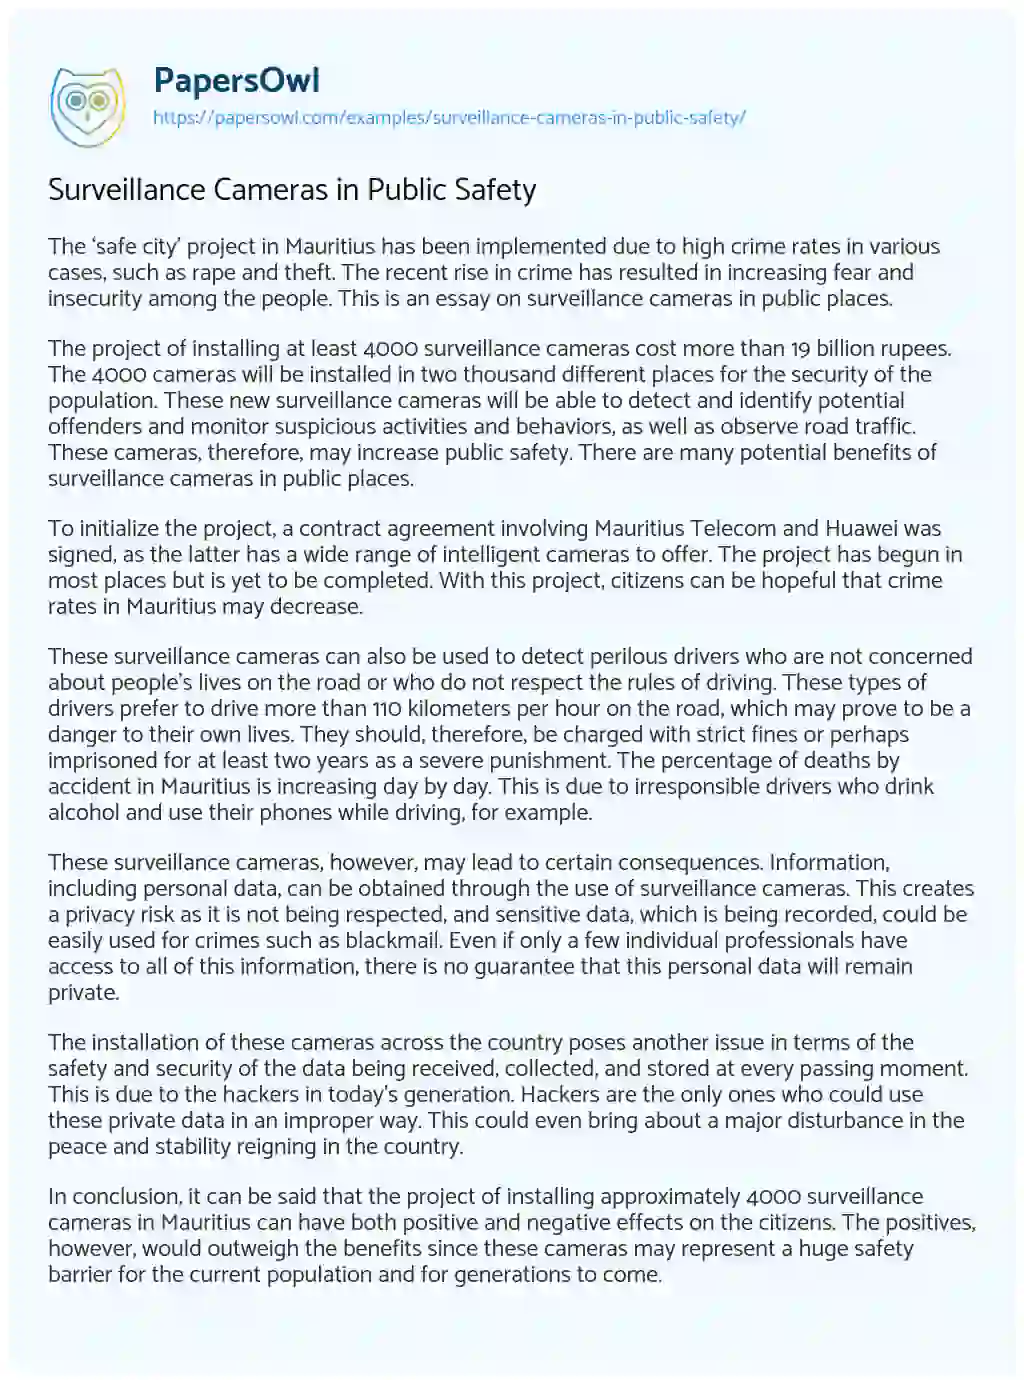 Essay on Surveillance Cameras in Public Safety